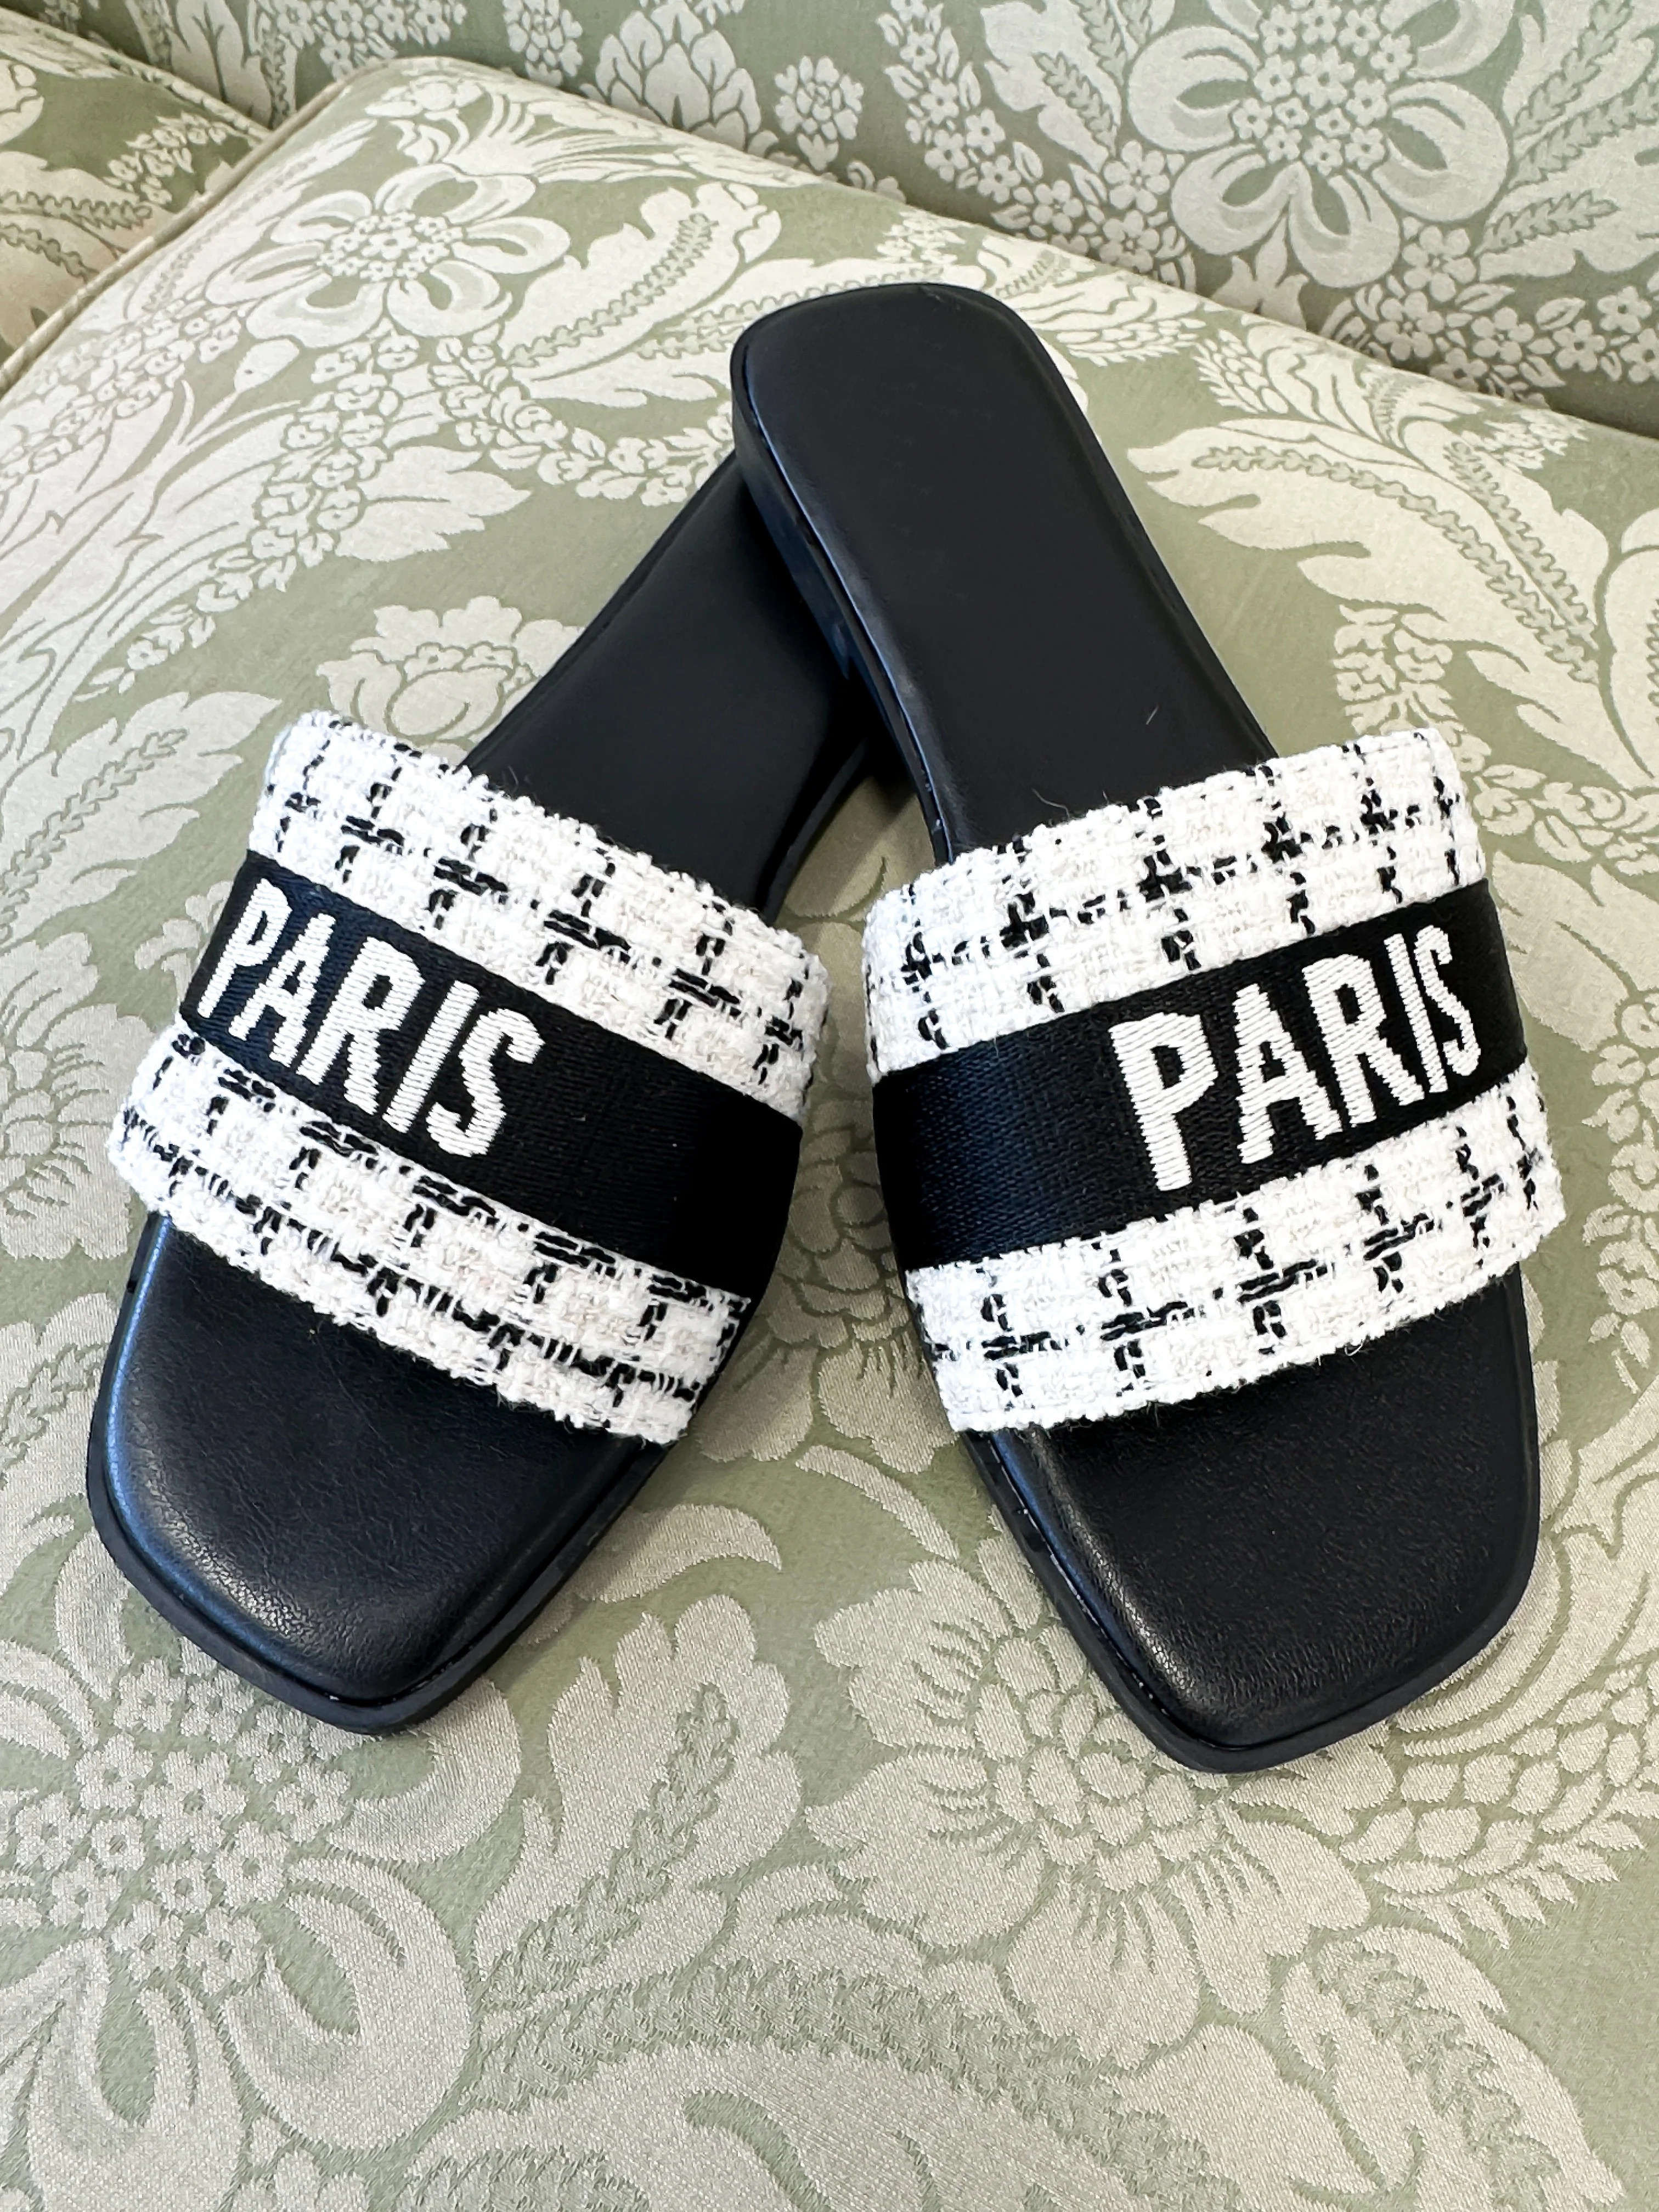 Paris Black & White Tweed Sandals FINAL SALE | Flourish in Frills